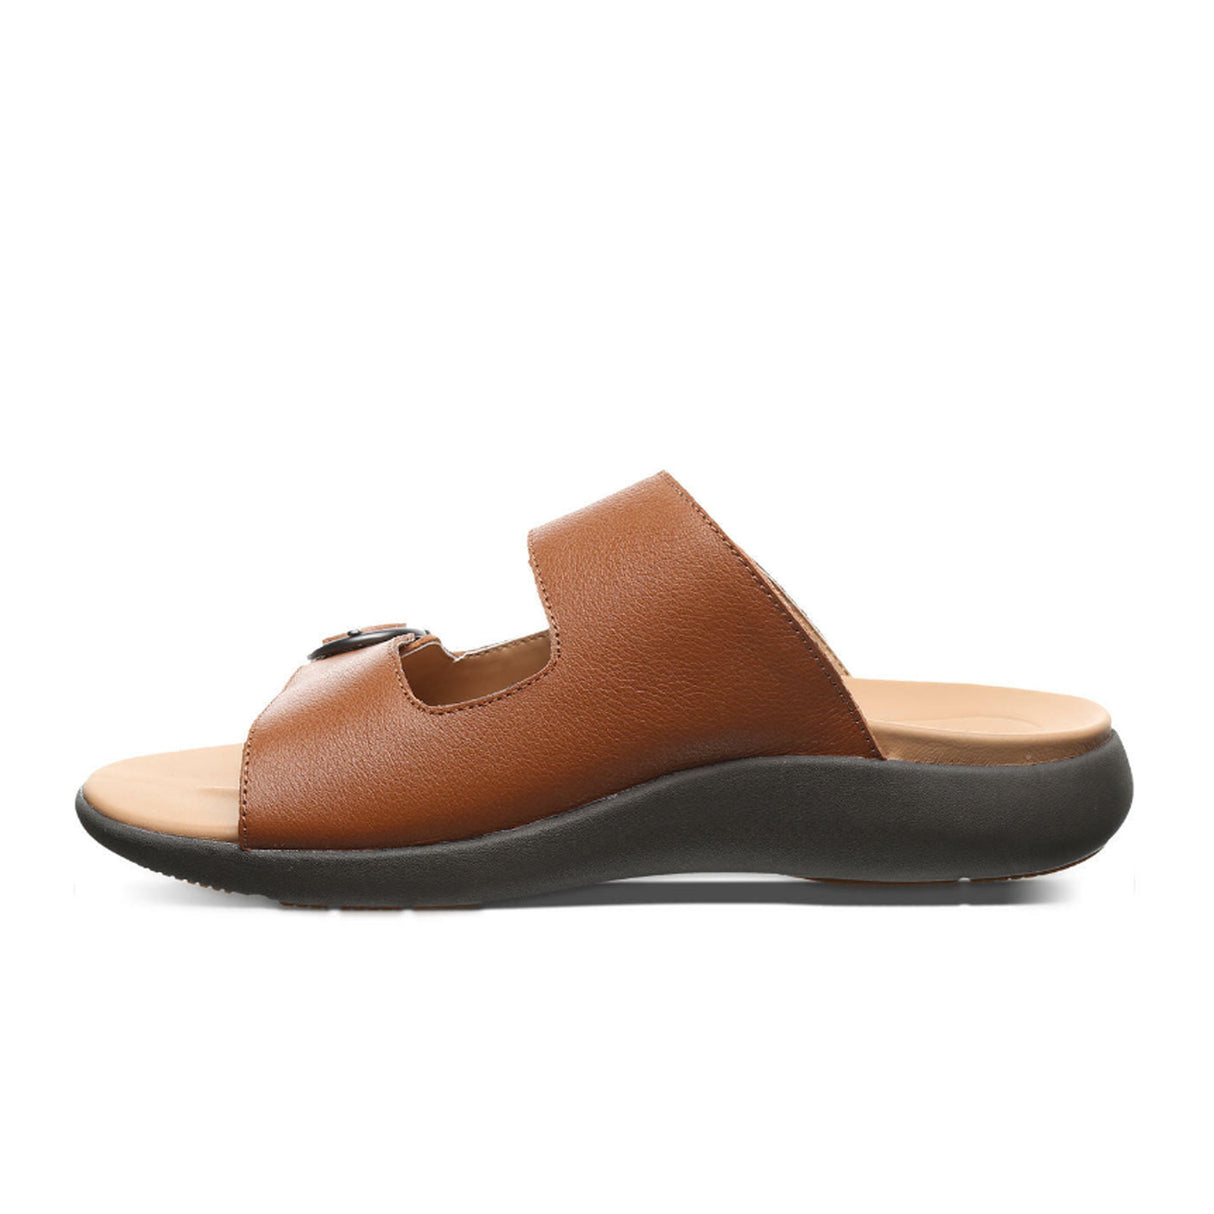 Strole Coral Slide Sandal (Women) - Hickory 2 Sandals - Slide - The Heel Shoe Fitters